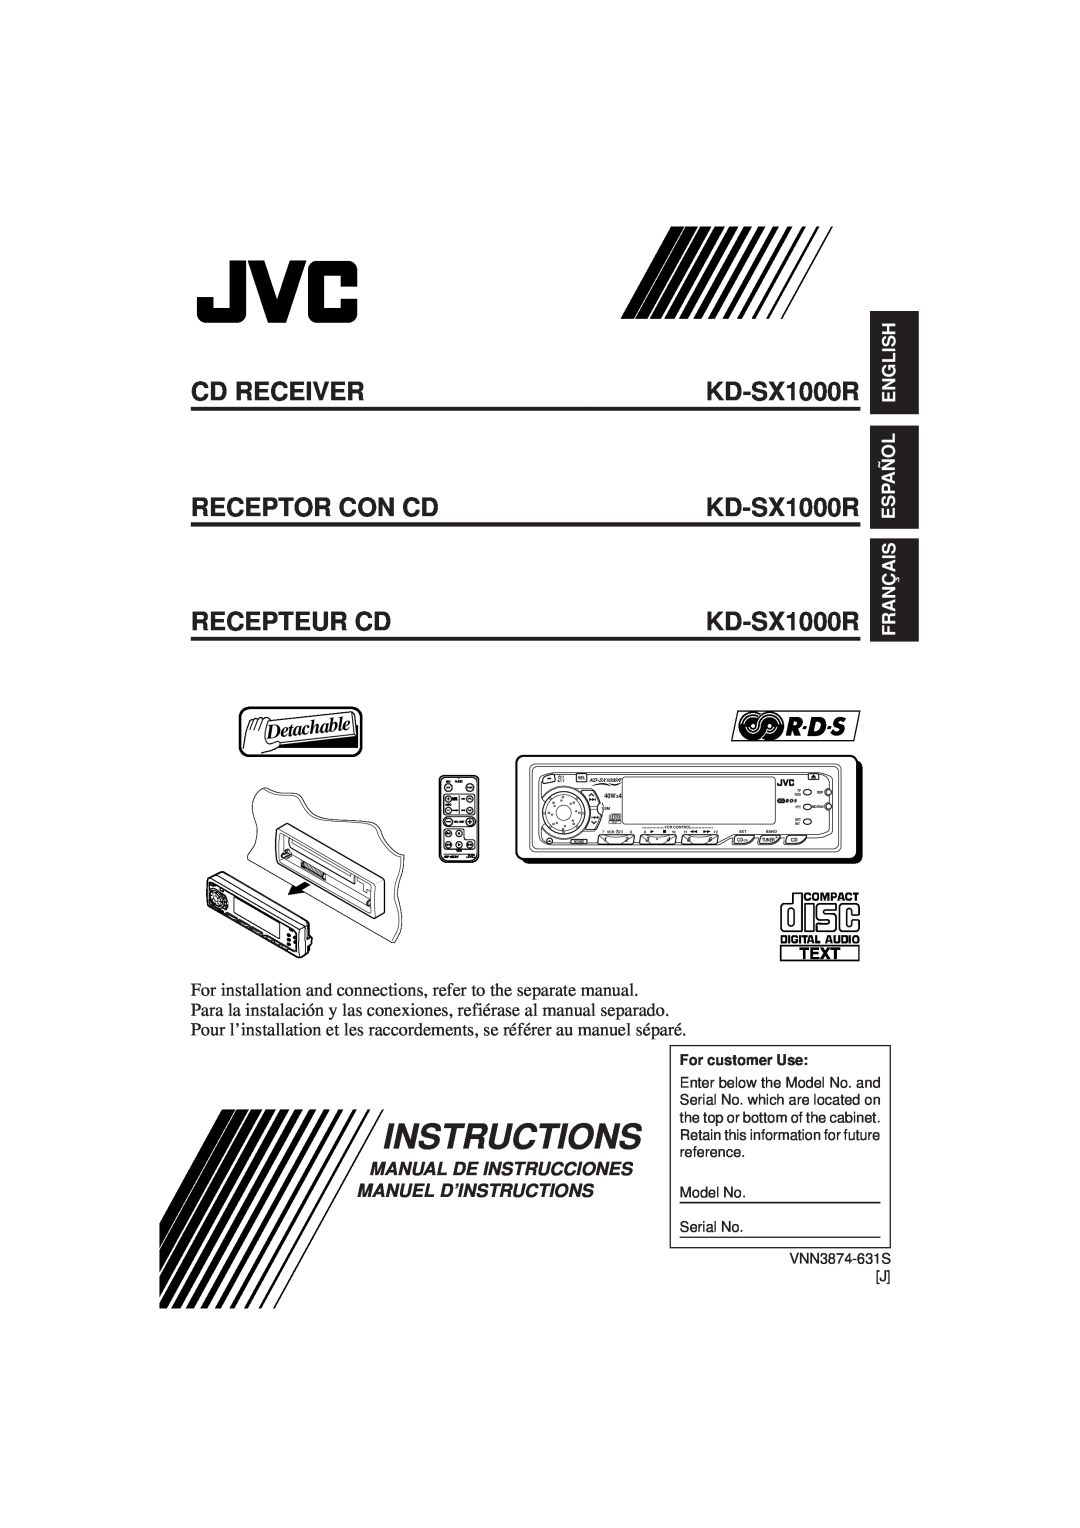 JVC KD-SX1000RJ manual Instructions, Cd Receiver Receptor Con Cd Recepteur Cd, English, Español, Français 